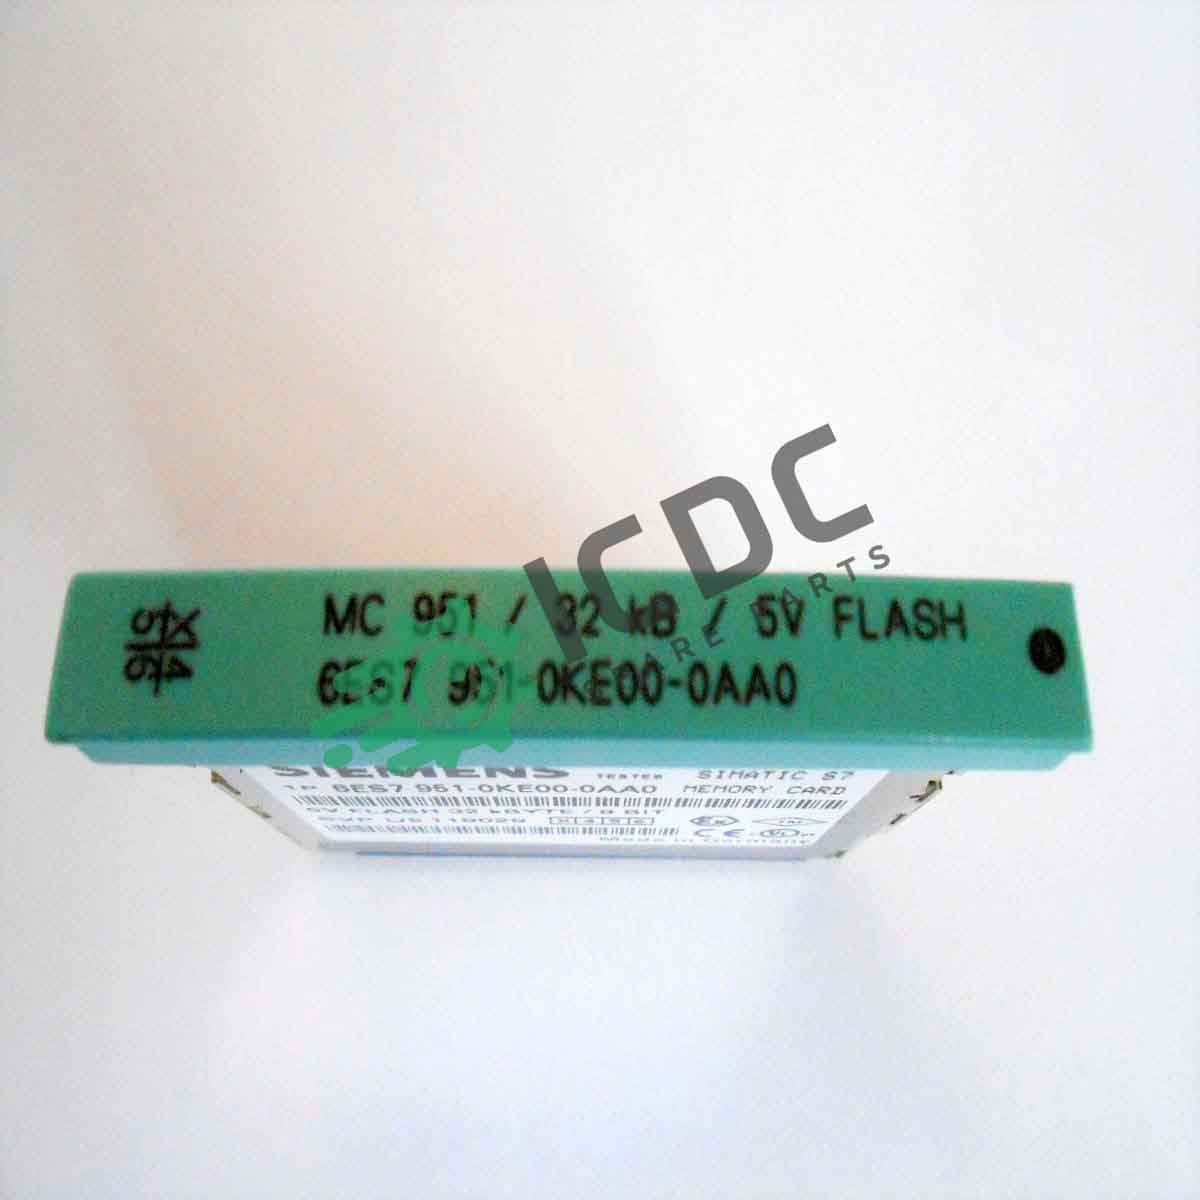 Siemens Simatic MC 951 Flash Card 5 V 128 Ko 8bit 6es7 951-0kg00-0aa0